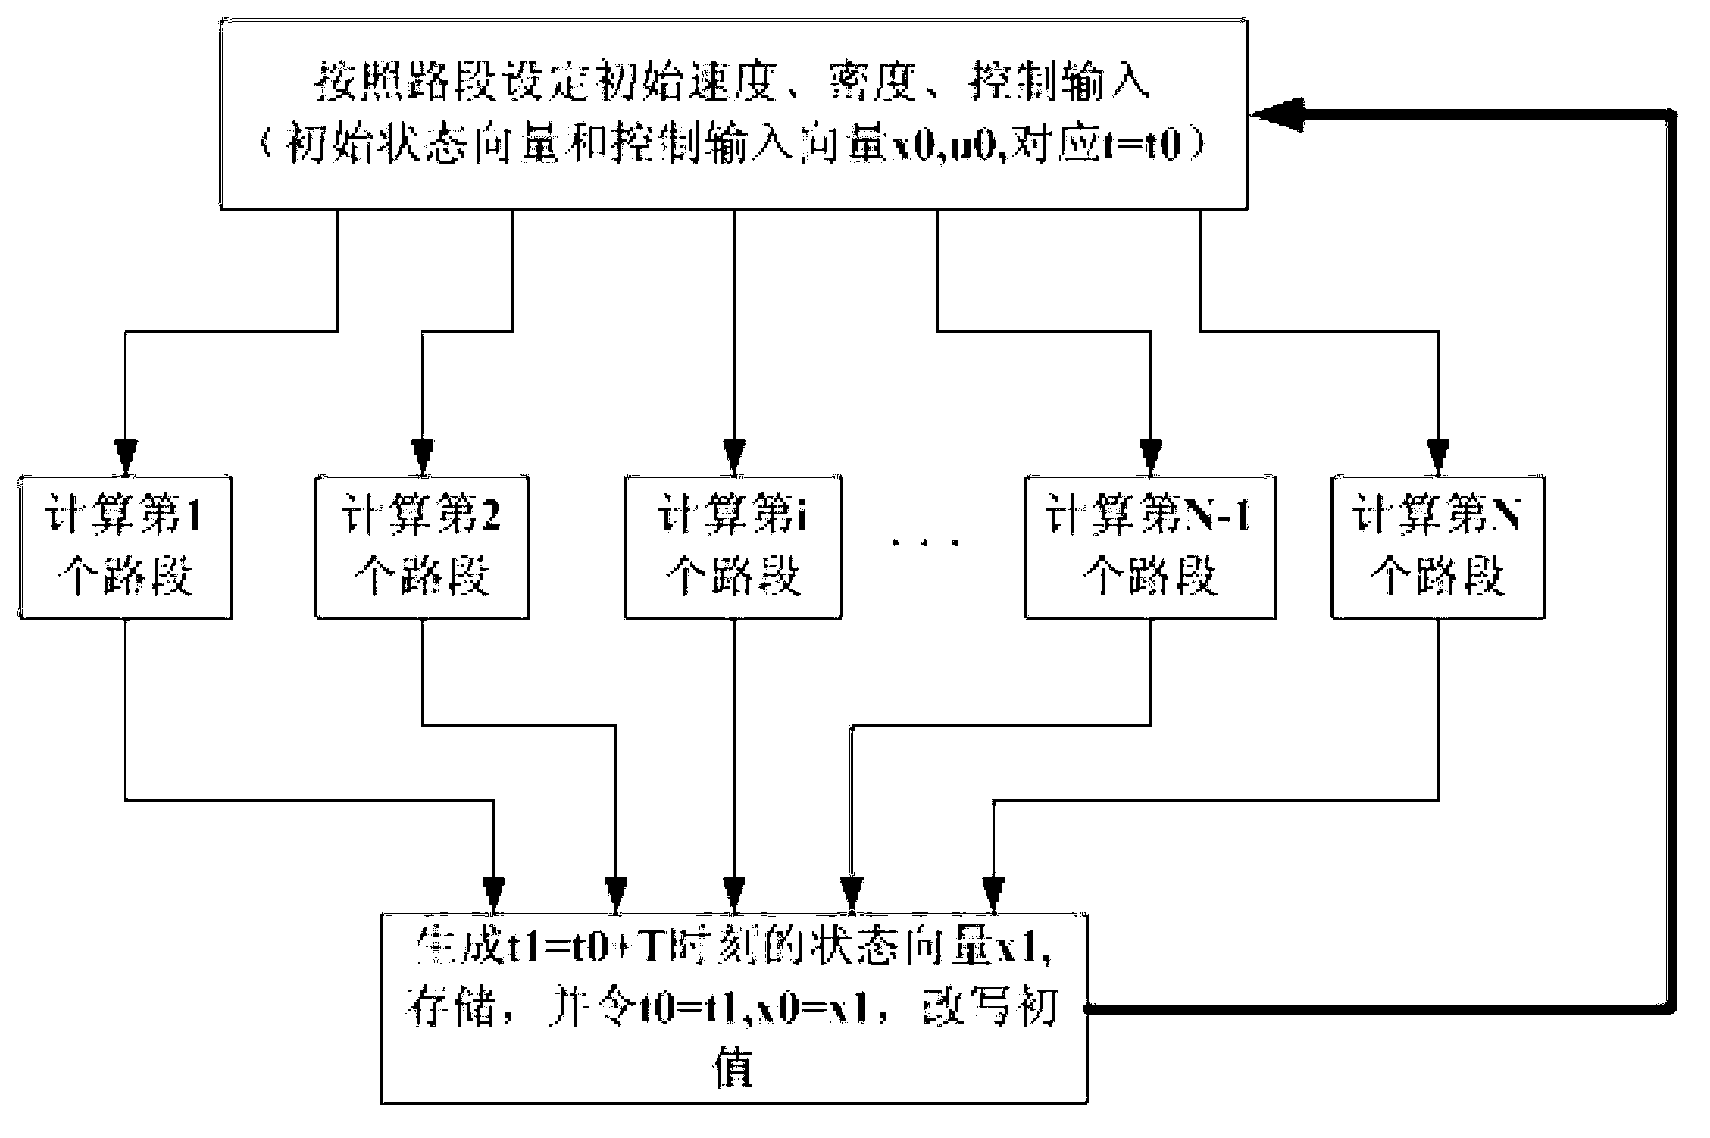 FPGA (Field Programmable Gate Array) online predication control method based on macroscopic traffic flow model formulated by Wu Zheng